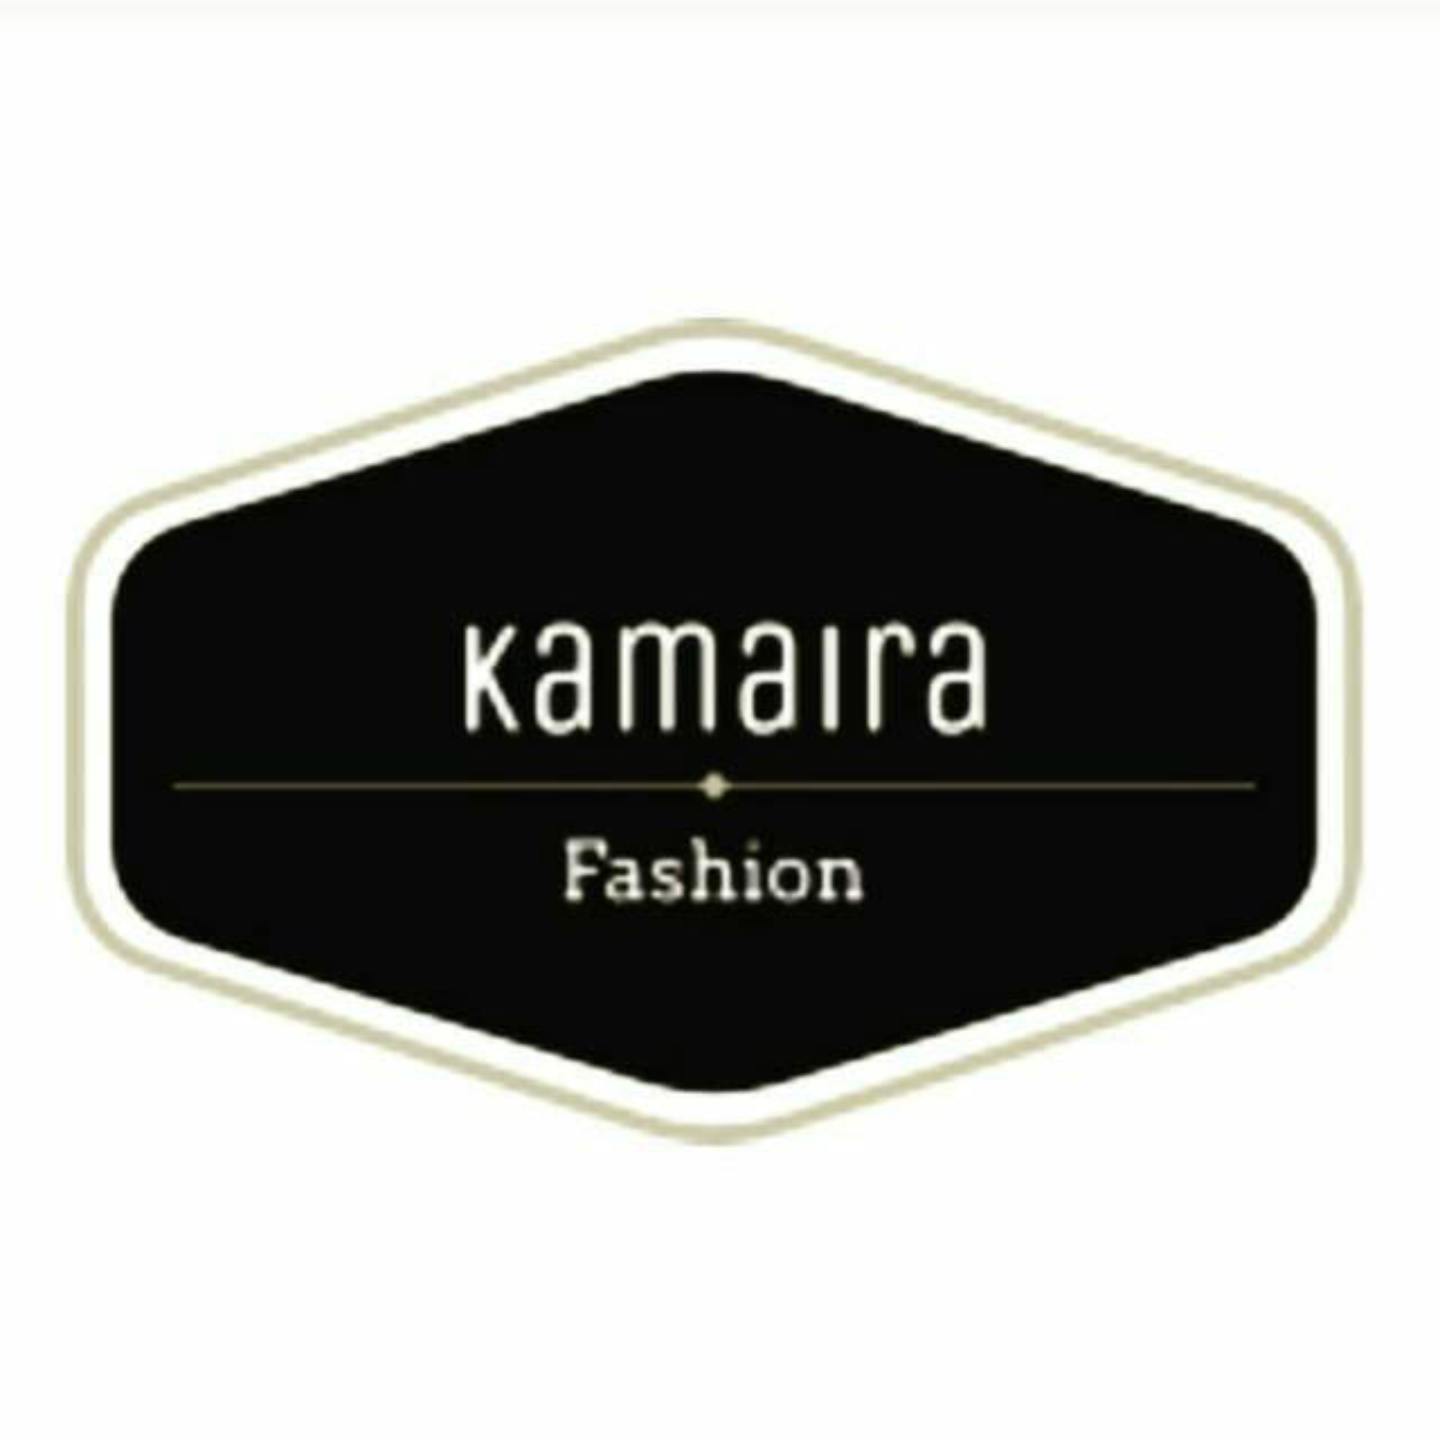 Kamaira Fashion